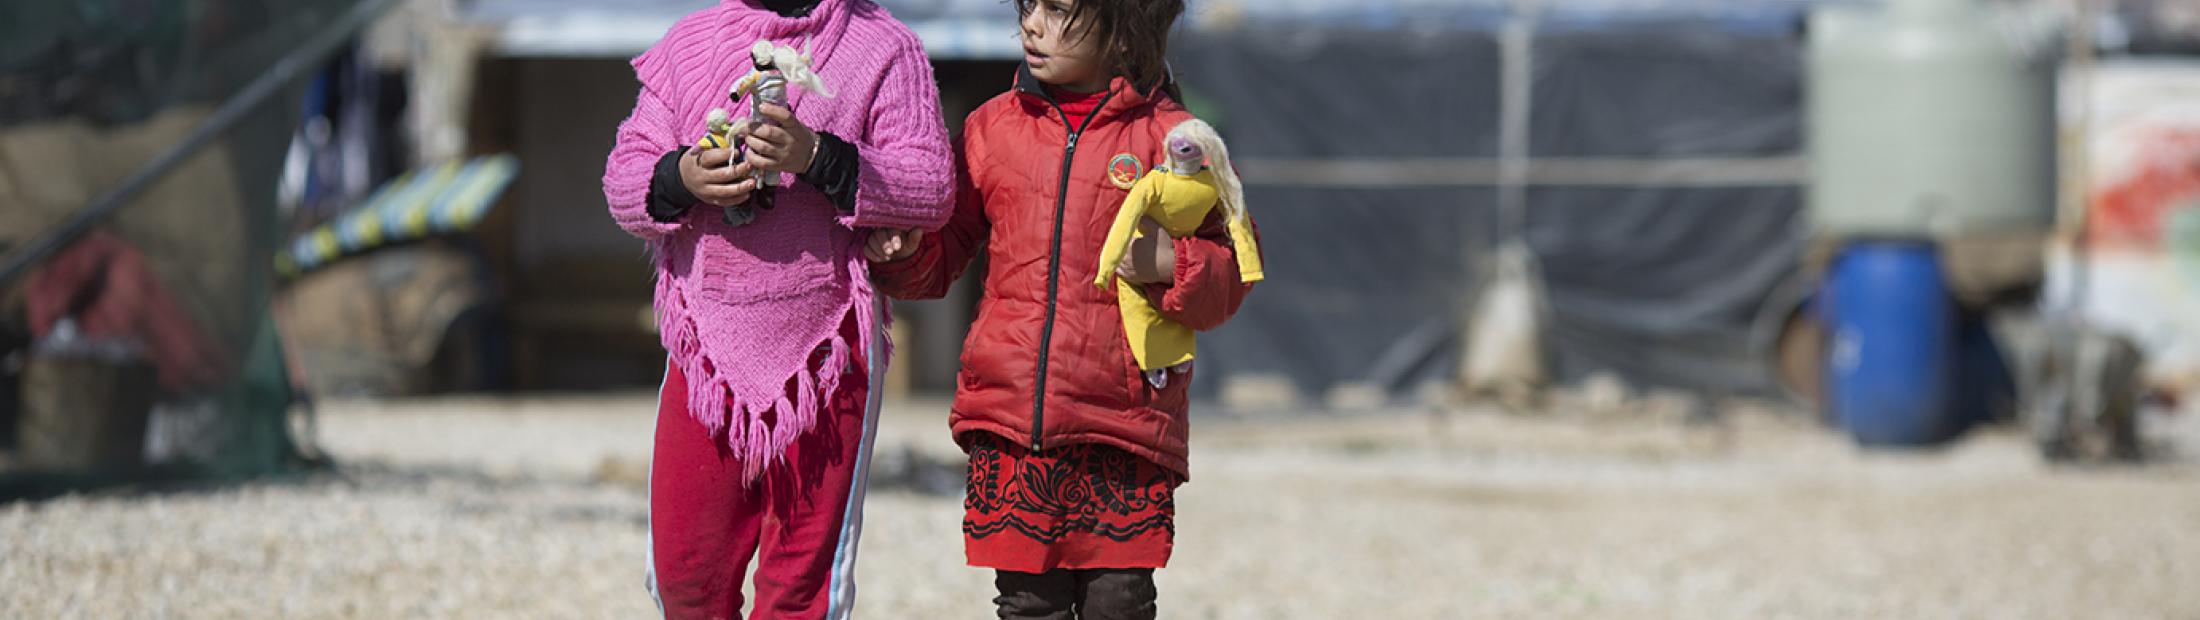 Muñecas de trapo cosidas por niñas sirias